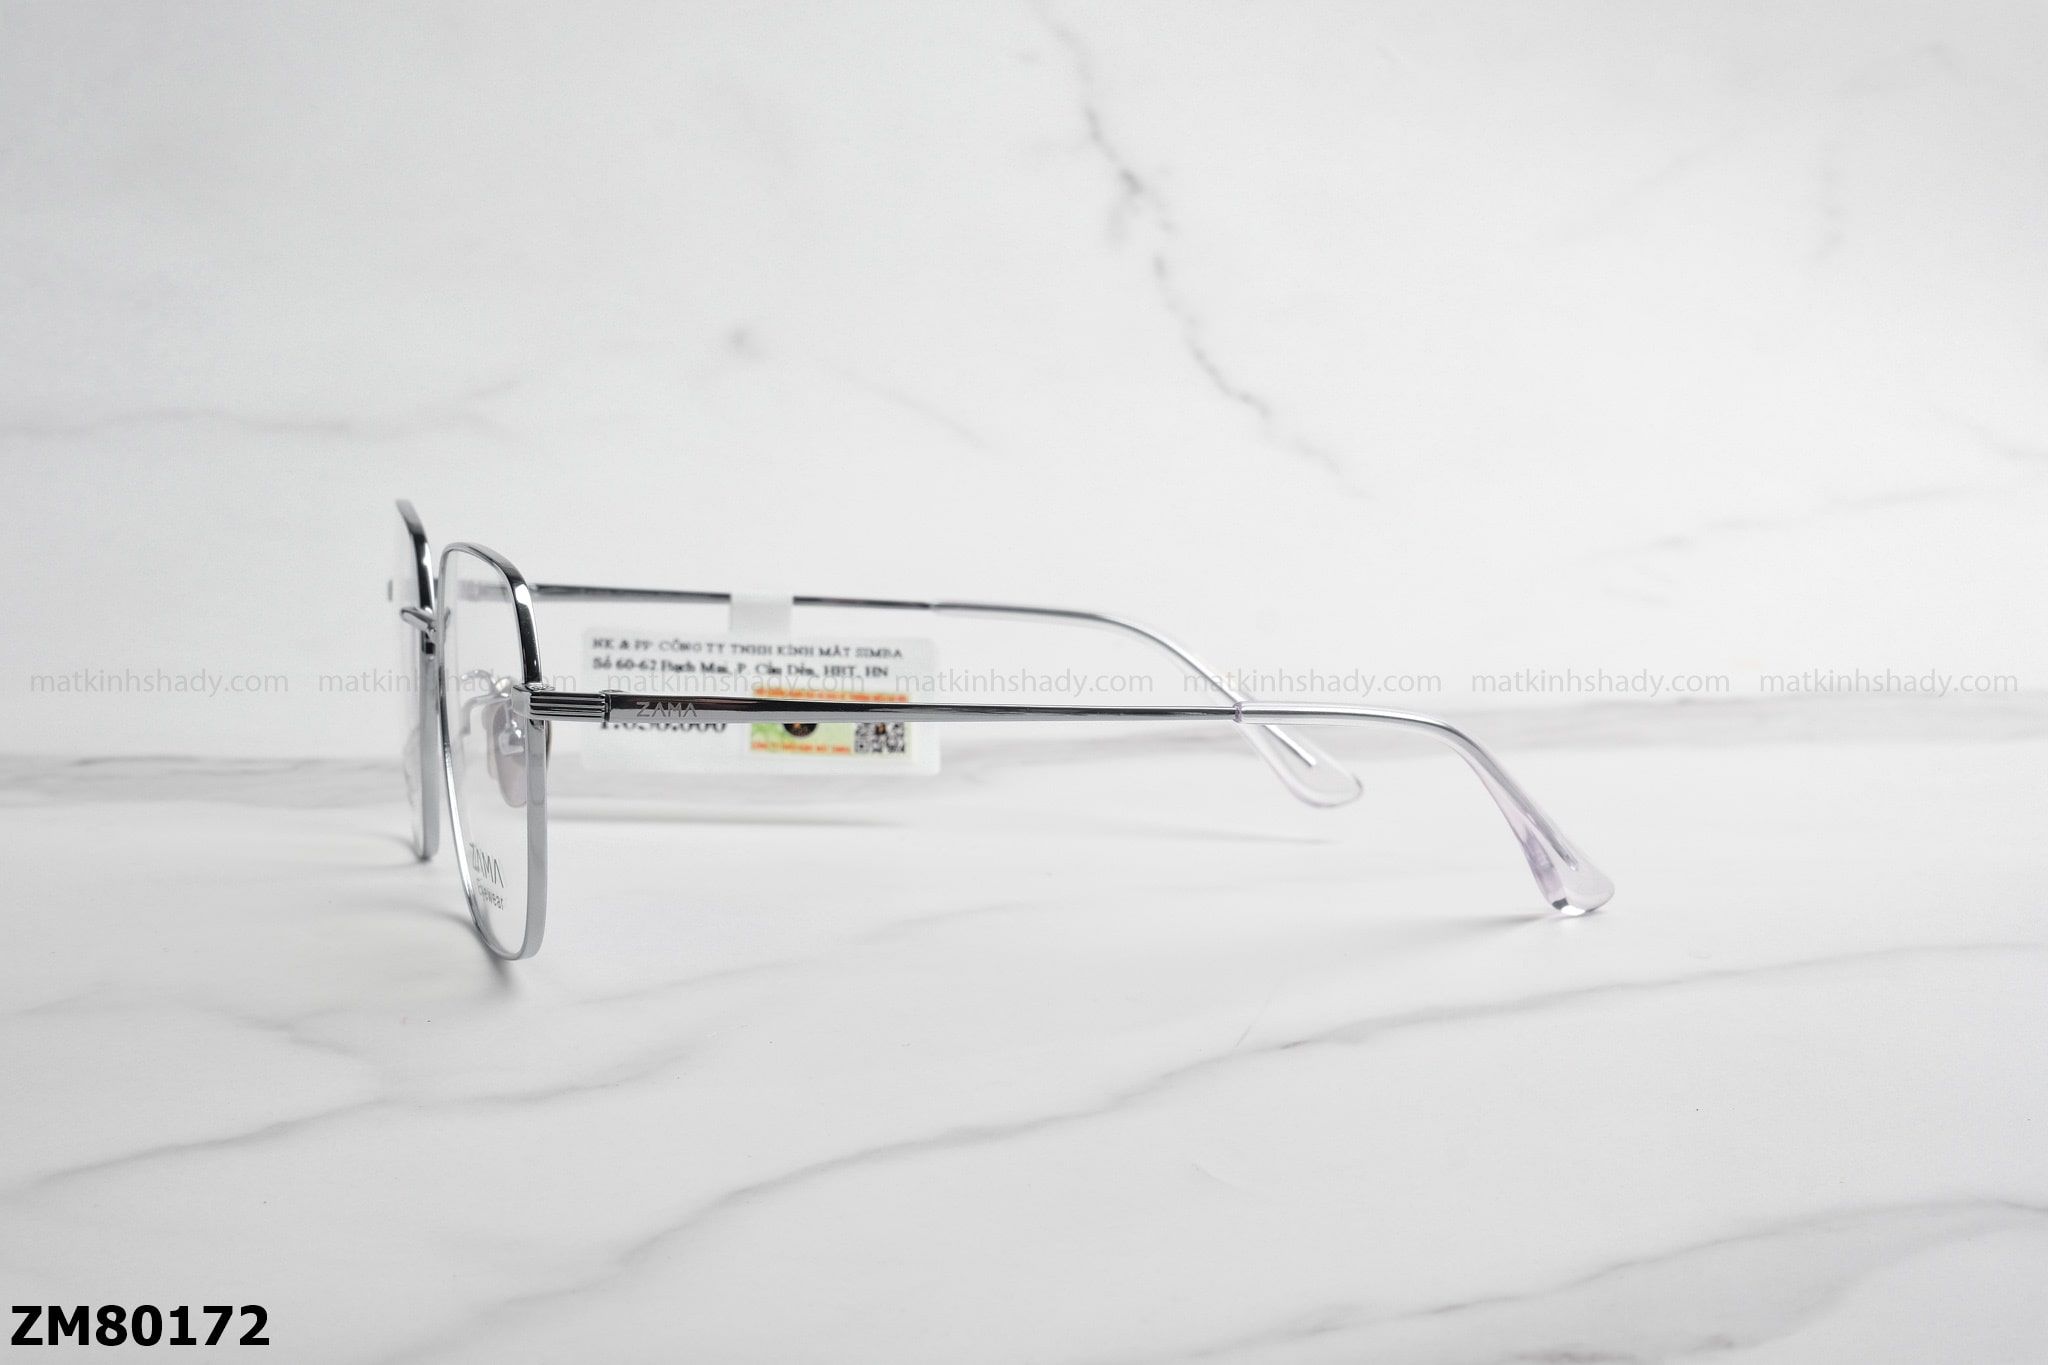  ZAMA Eyewear - Glasses - ZM80172 